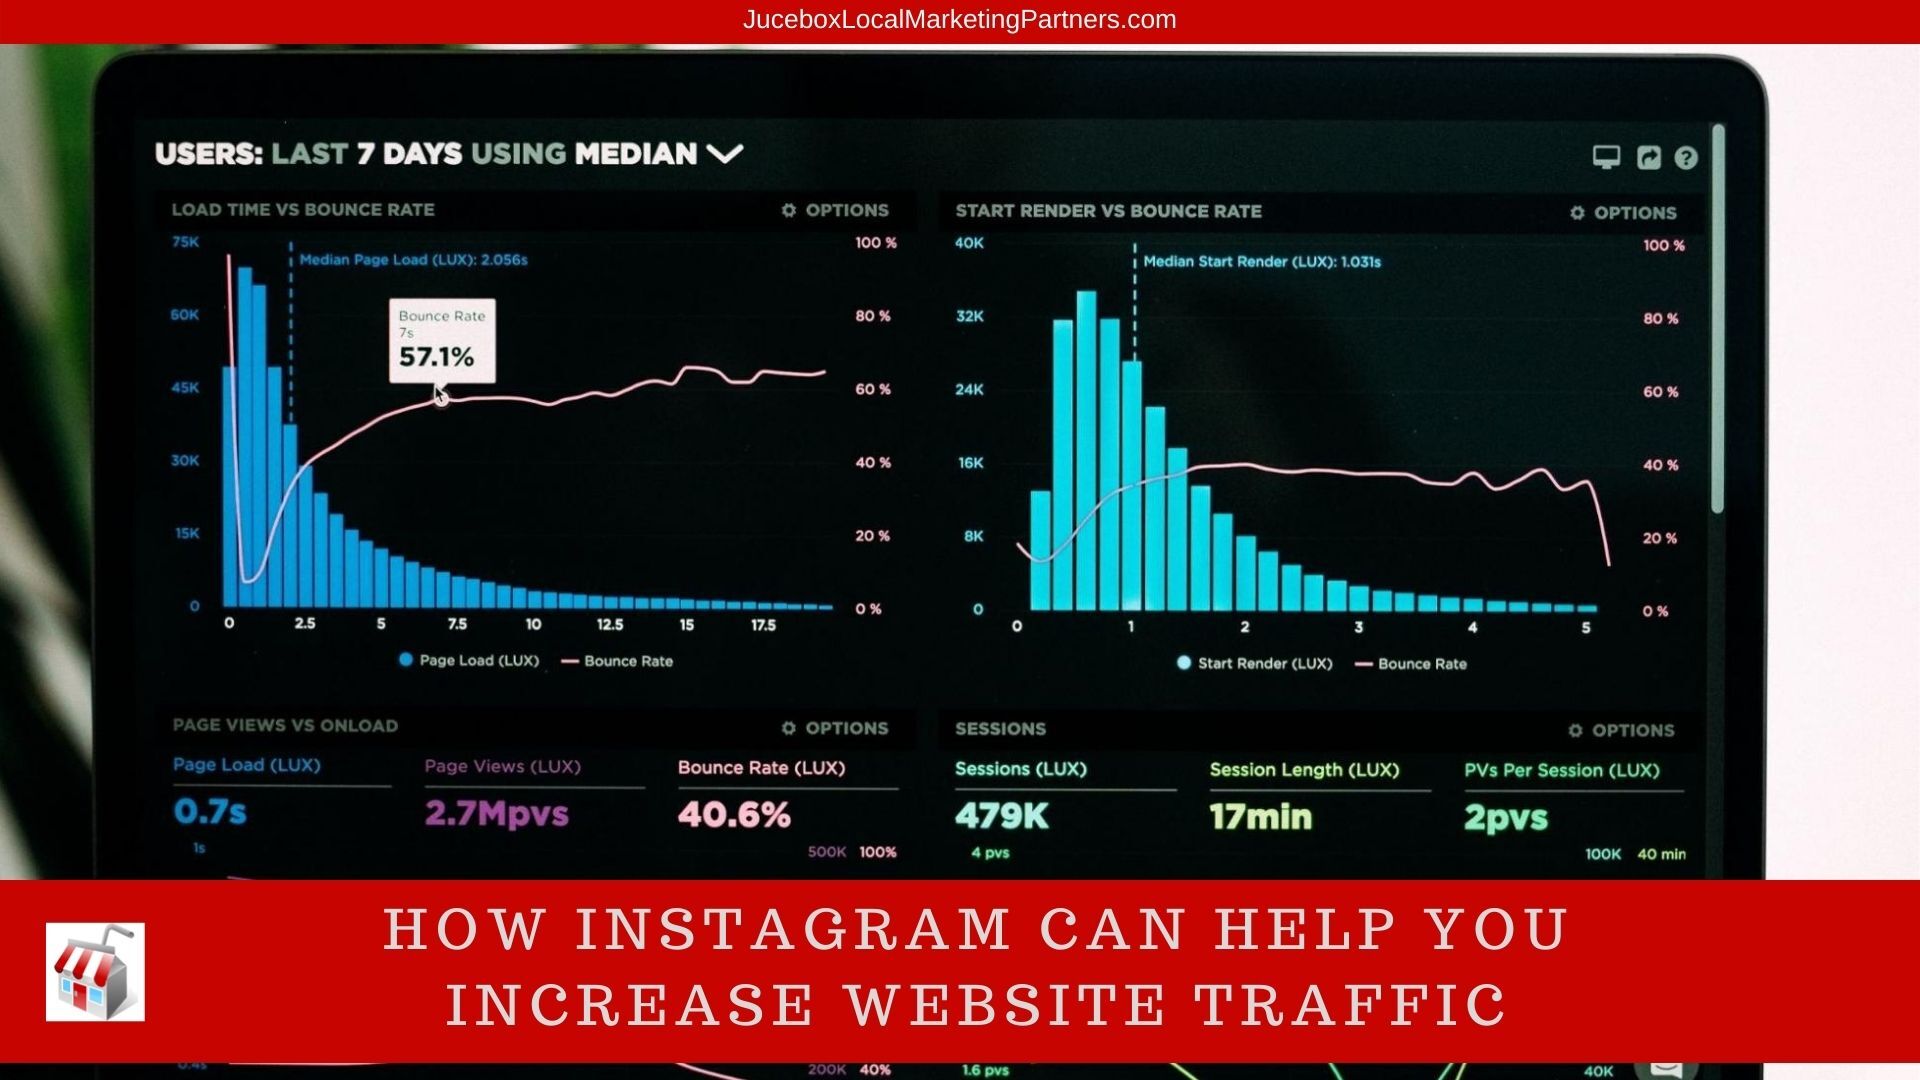 Increase website traffic with Instagram